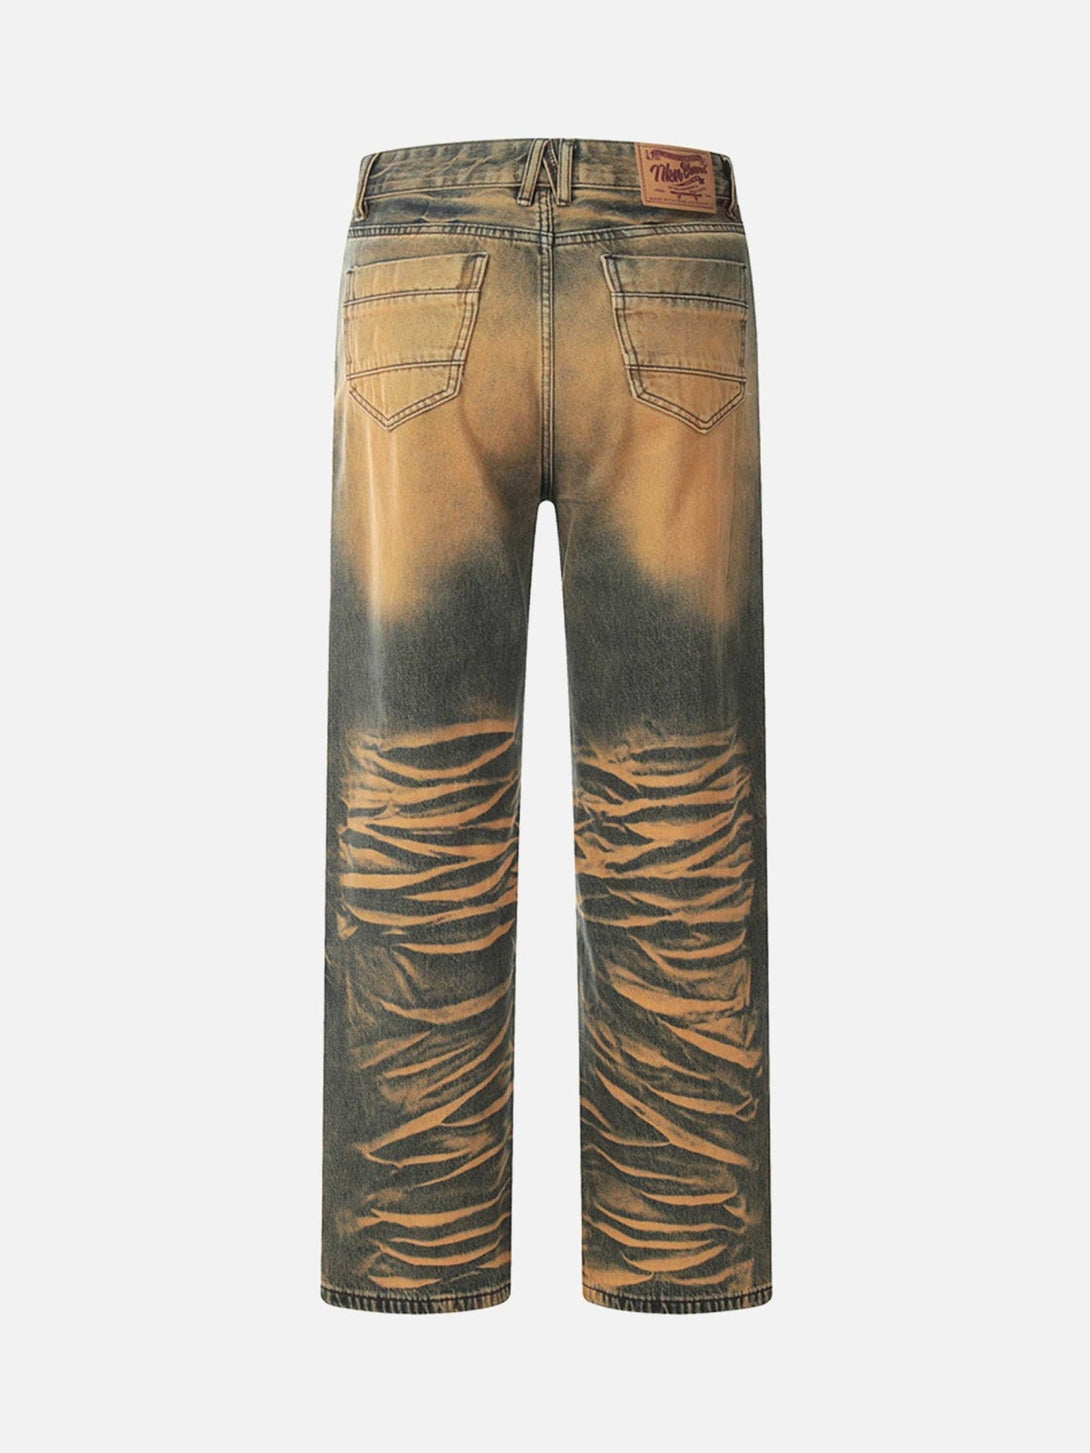 Majesda® - Colorblocked Airbrushed Wide Leg Jeans- Outfit Ideas - Streetwear Fashion - majesda.com